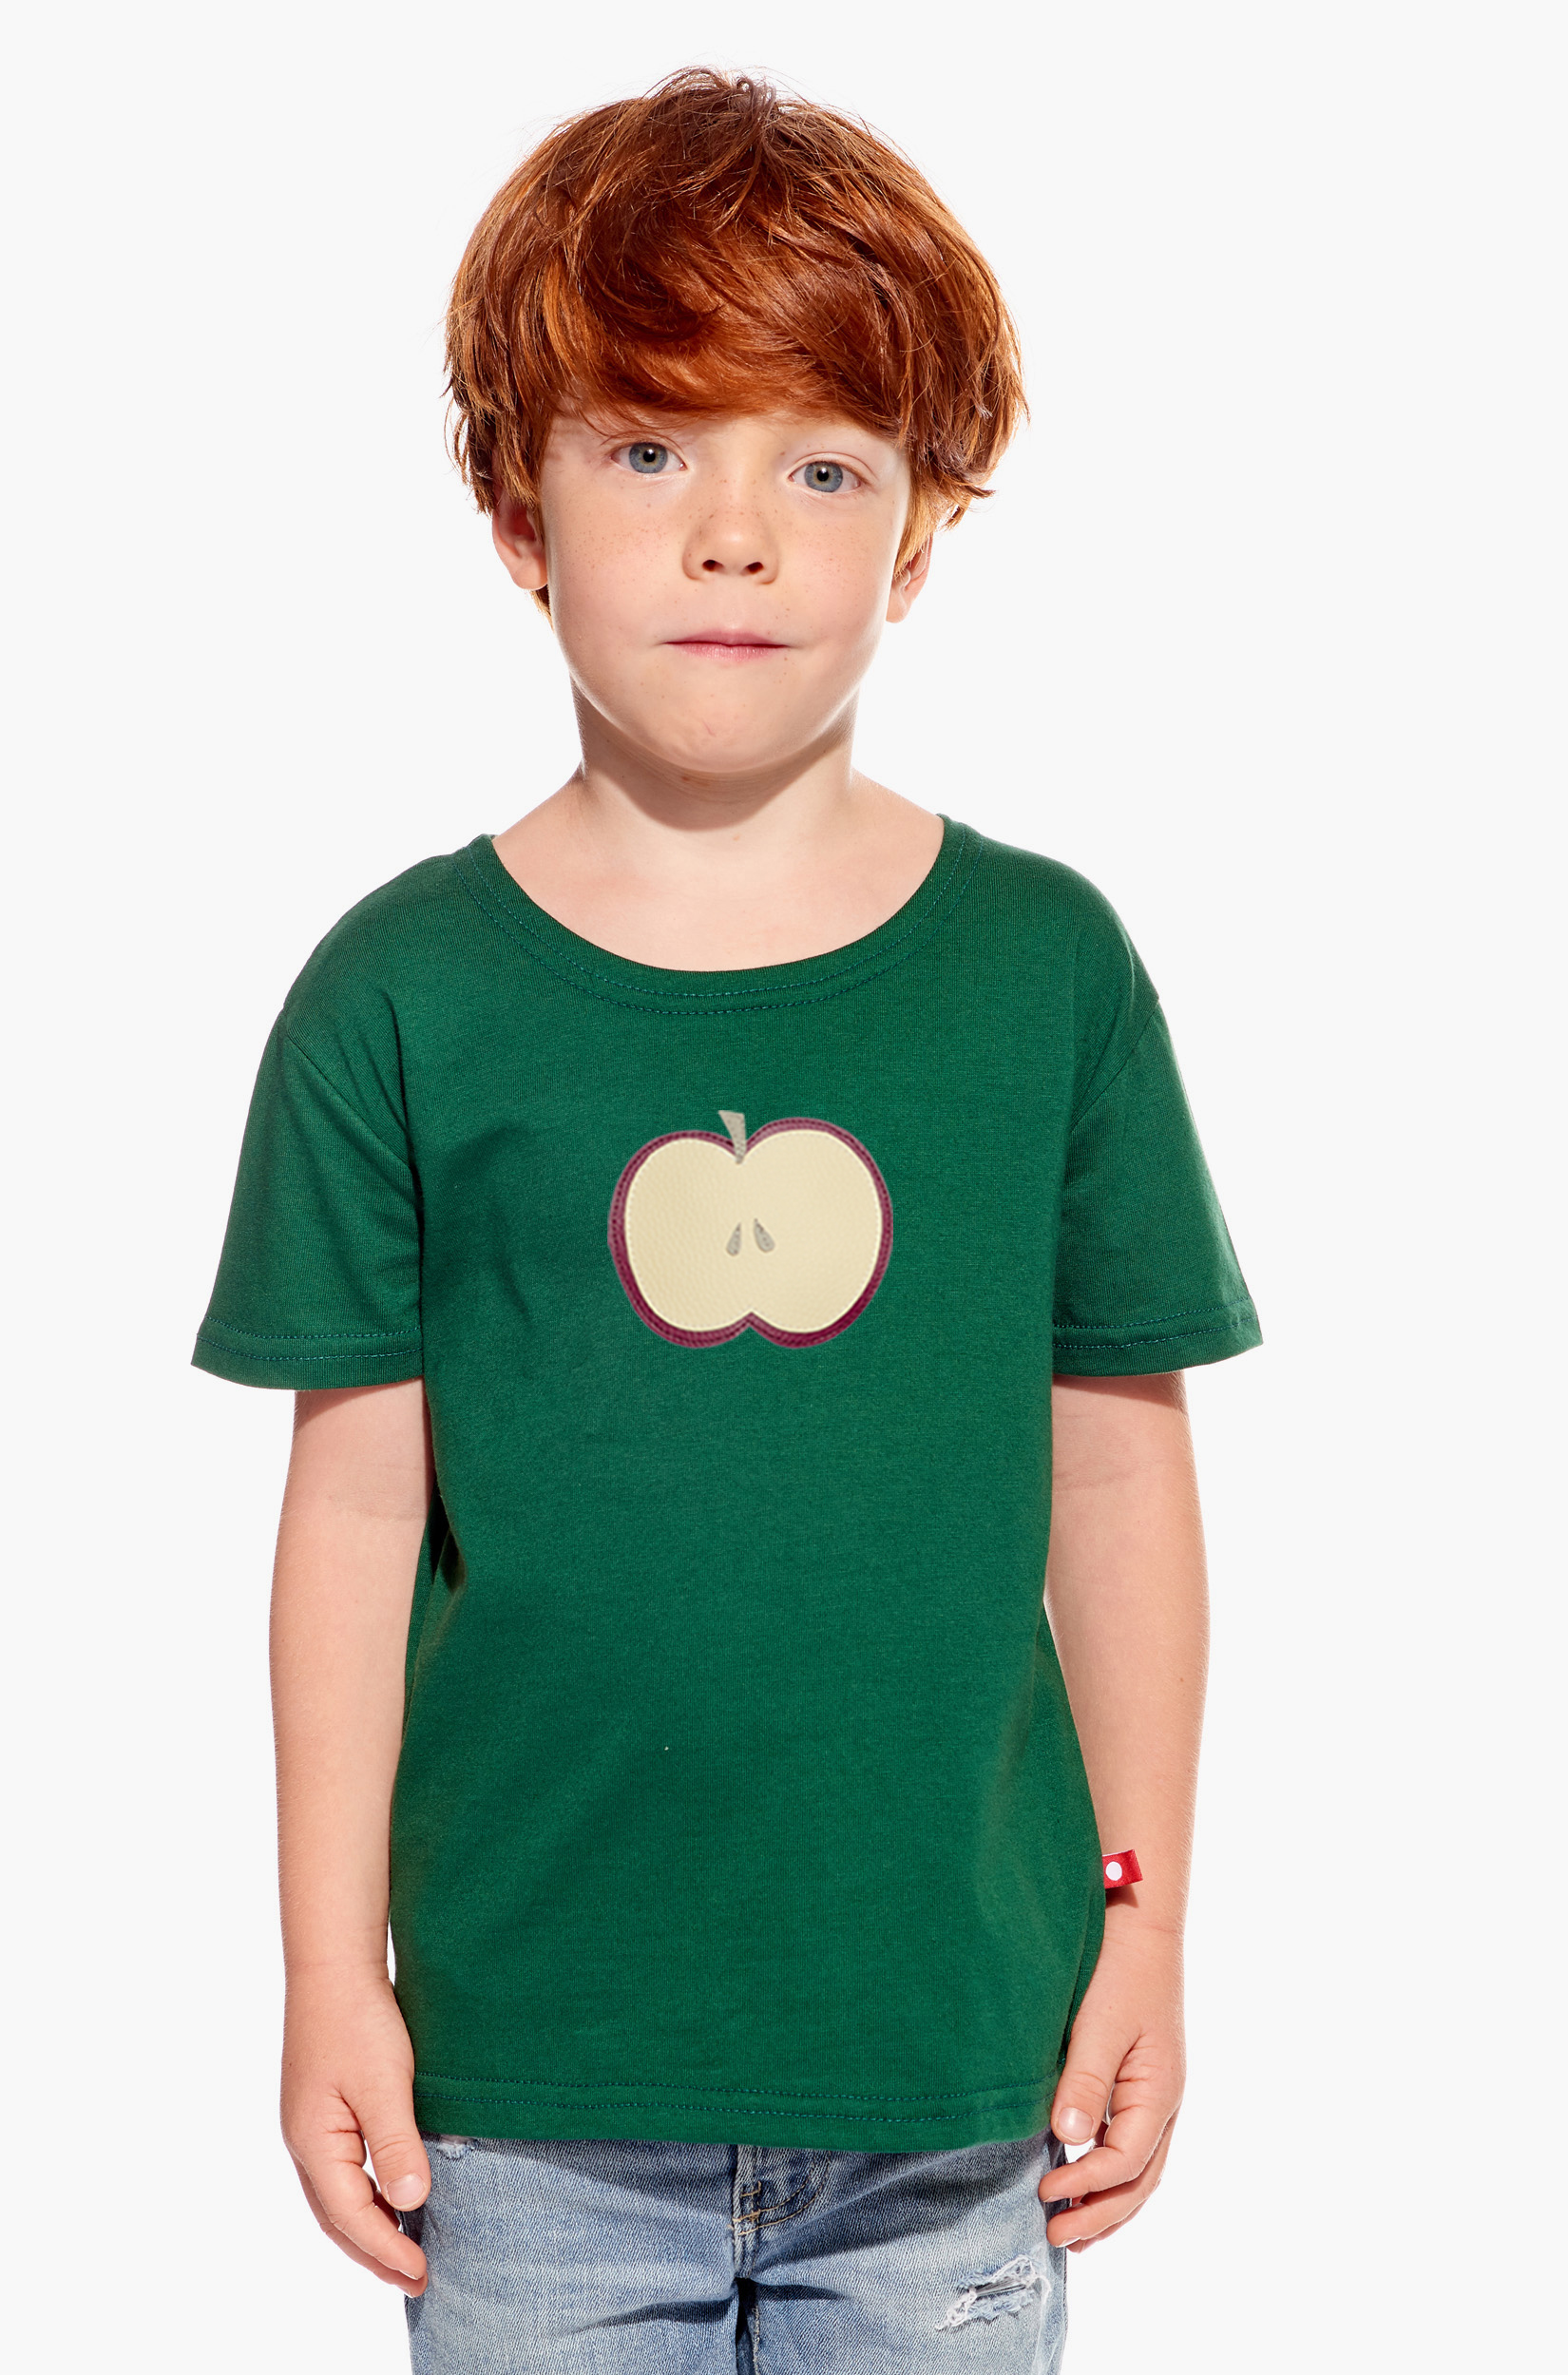 Tričko s jablkem